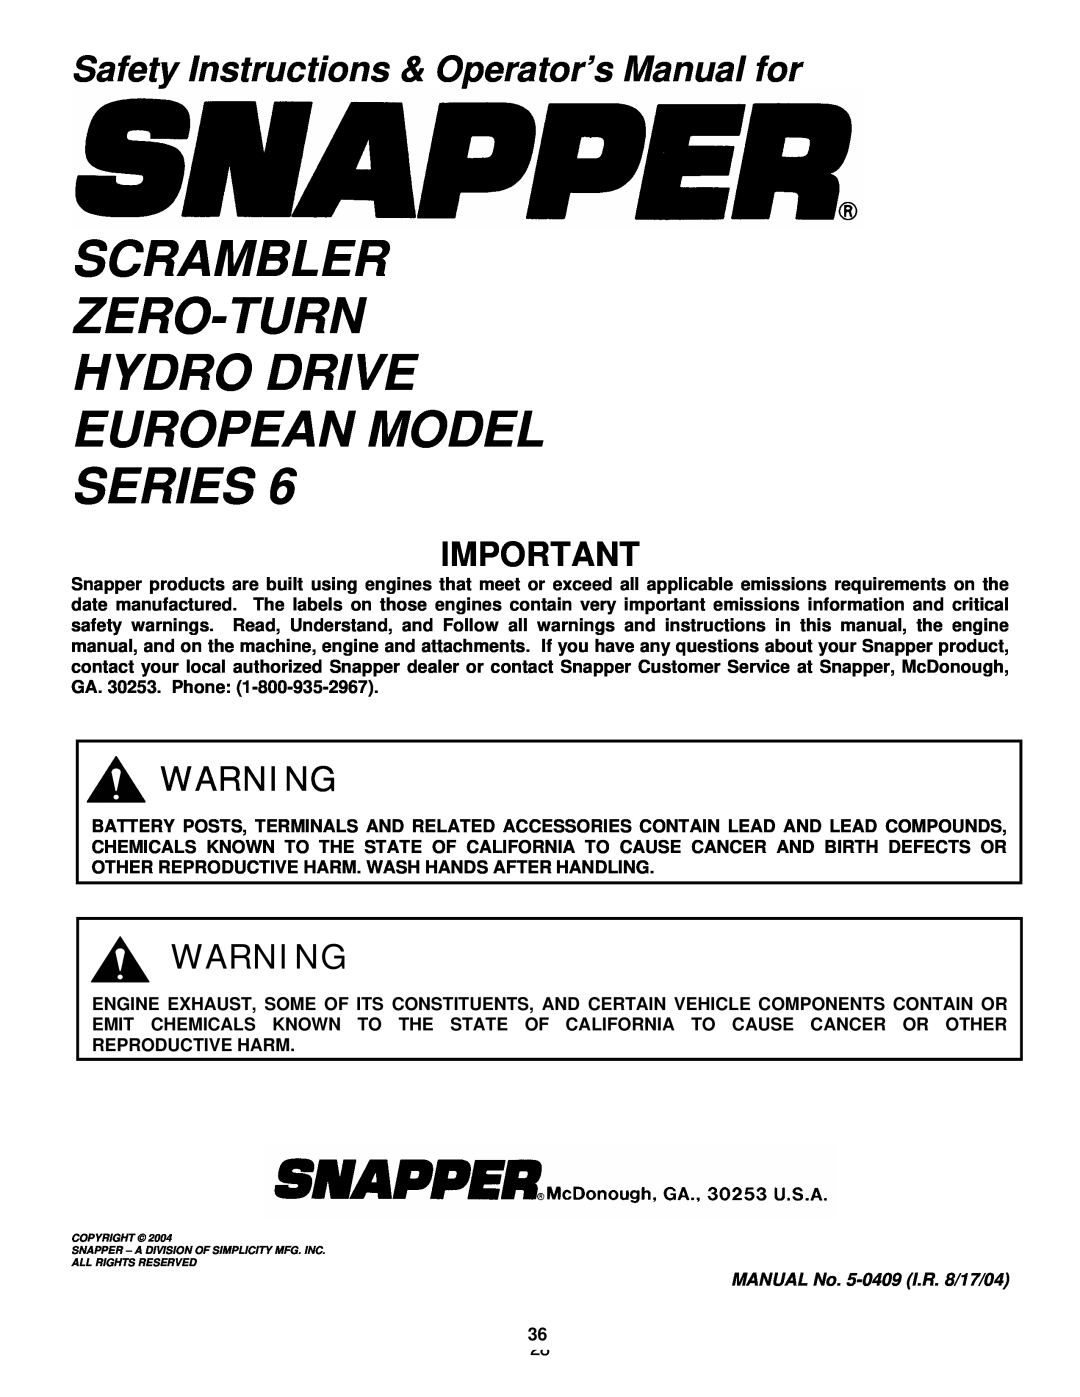 Snapper ESZT18336BVE Scrambler Zero-Turn Hydro Drive European Model Series, Safety Instructions & Operator’s Manual for 